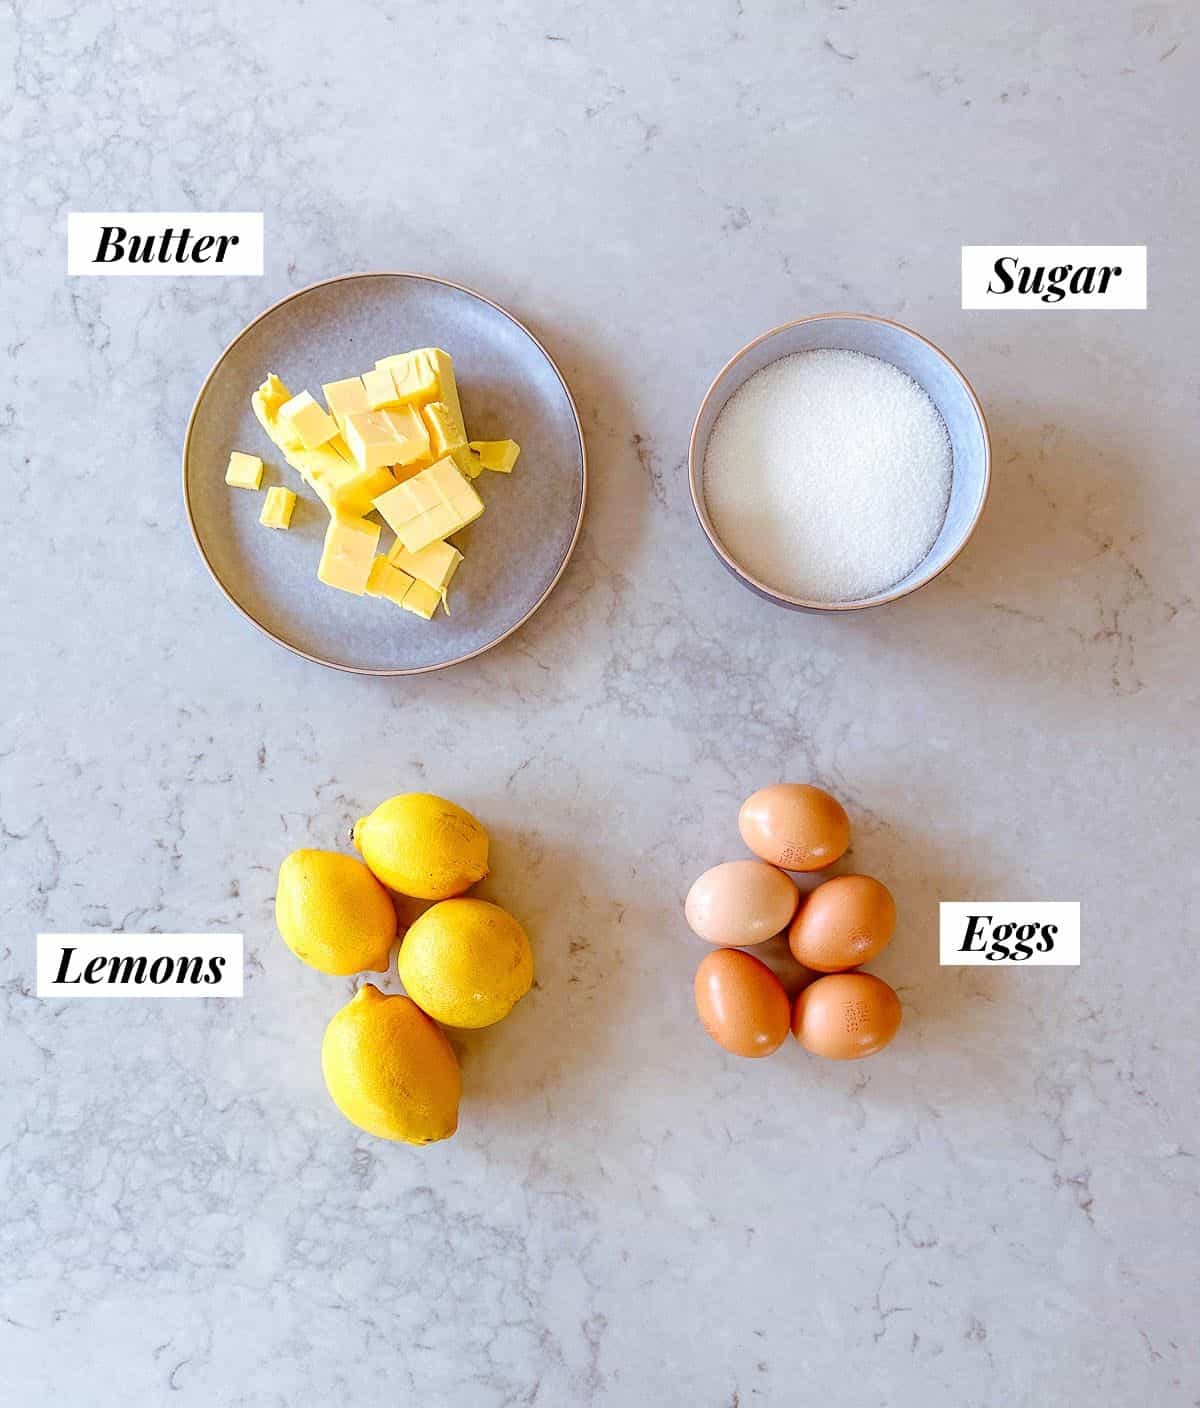 lemons, butter, eggs and sugar ingredients to make lemon curd.